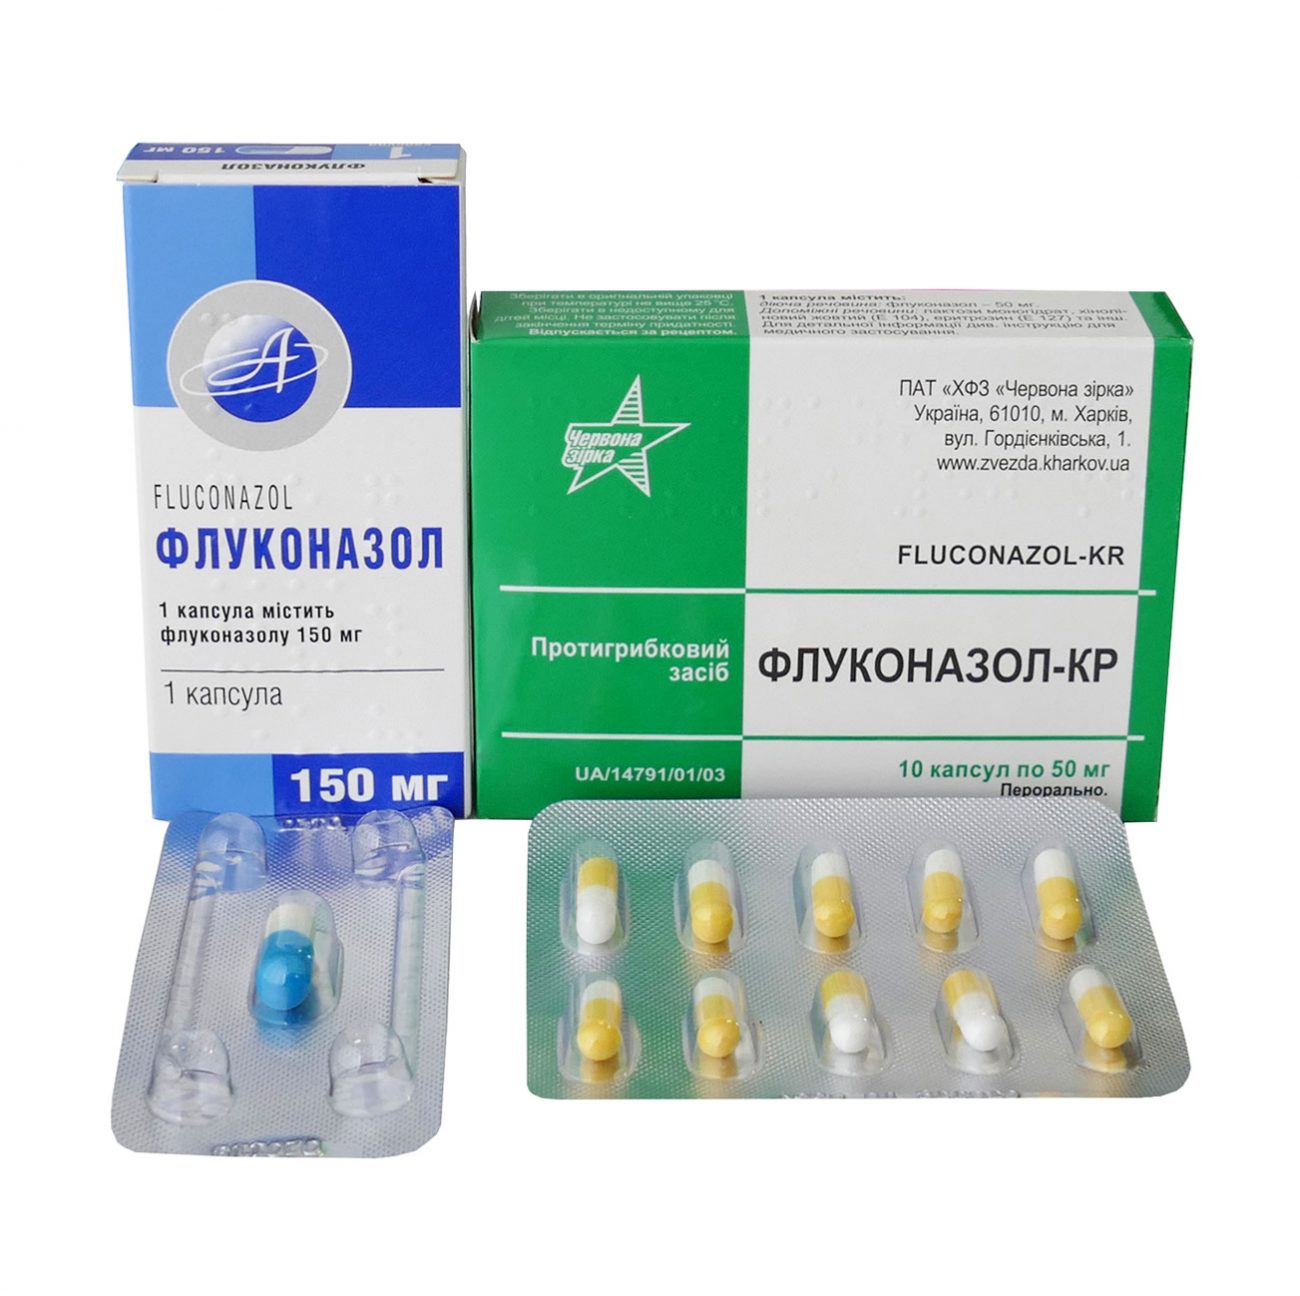 Флуконазол 150 - таблетки от молочницы: инструкция по применению и цена